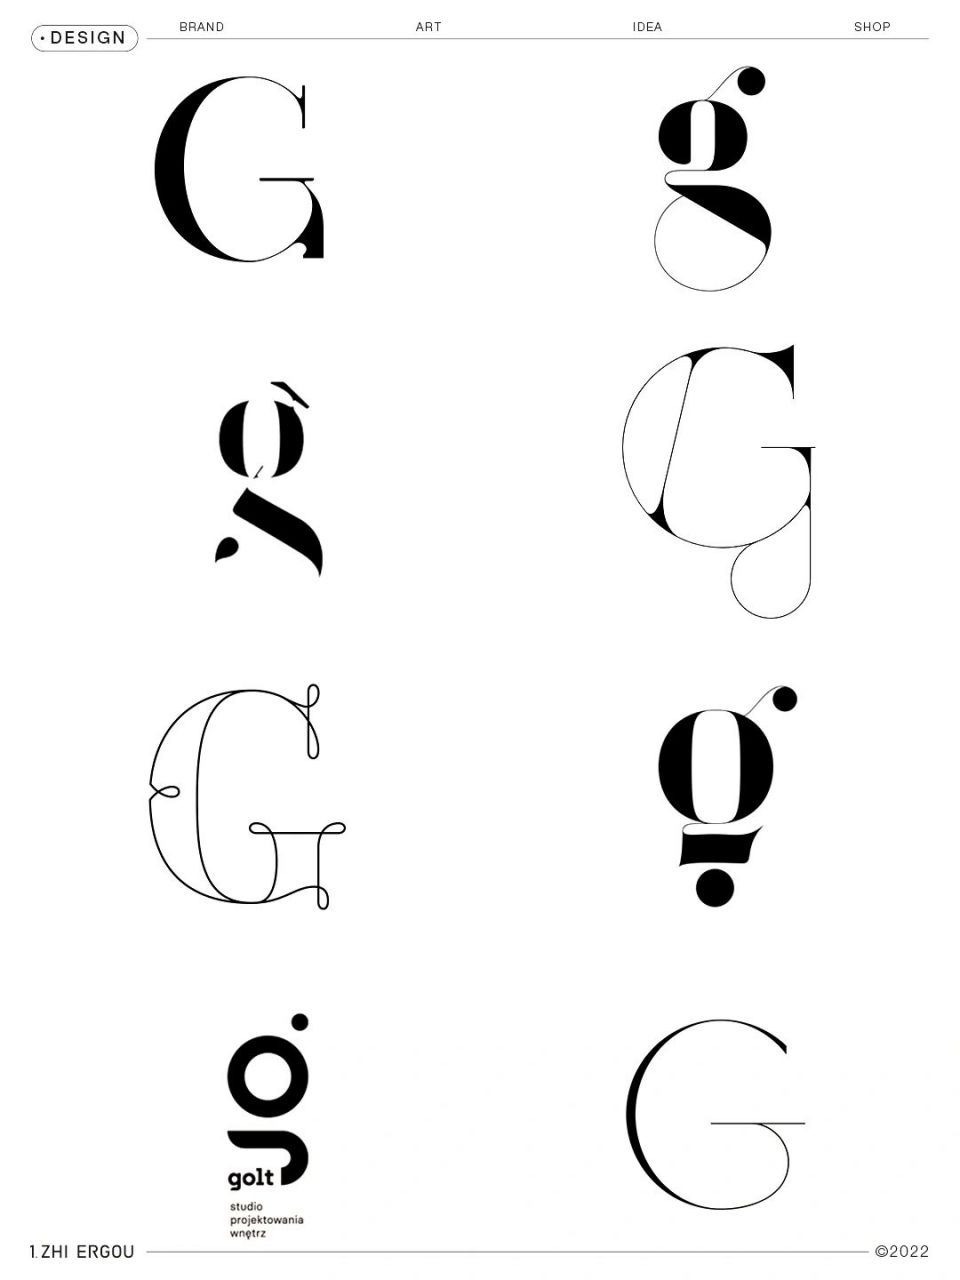 g字母创意简笔画图片